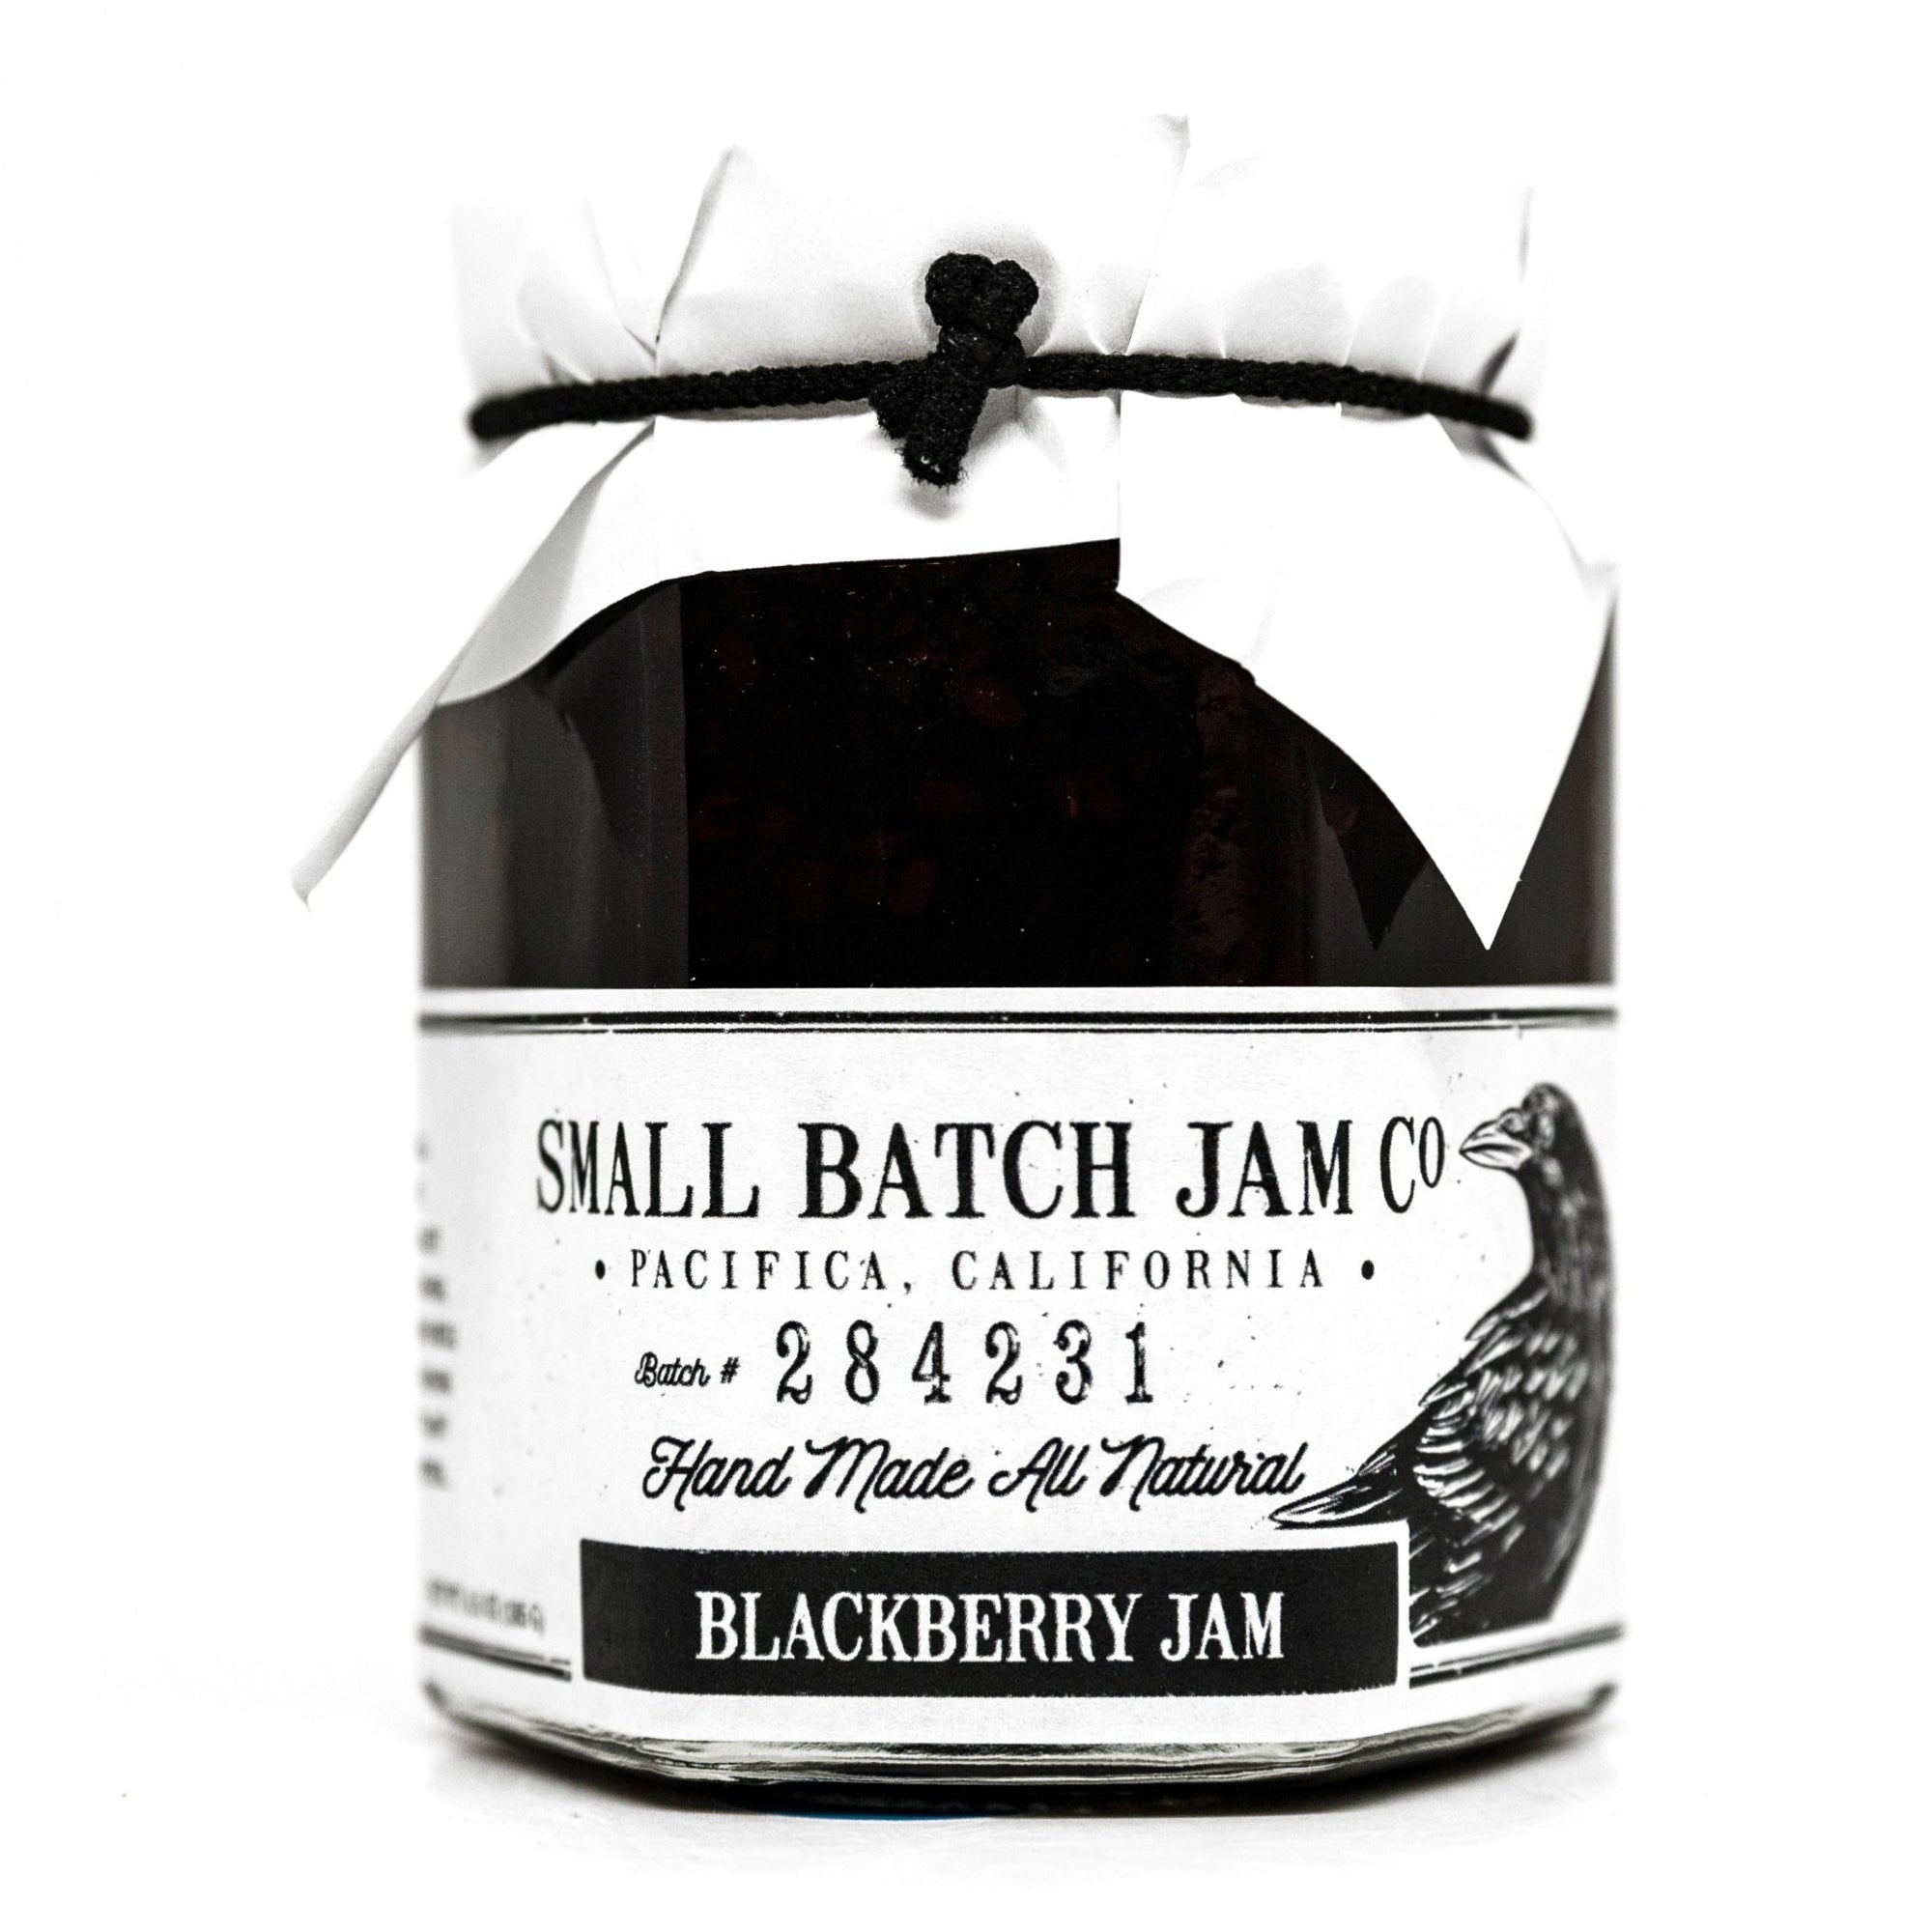 Blackberry Jam - Small Batch Jam Co